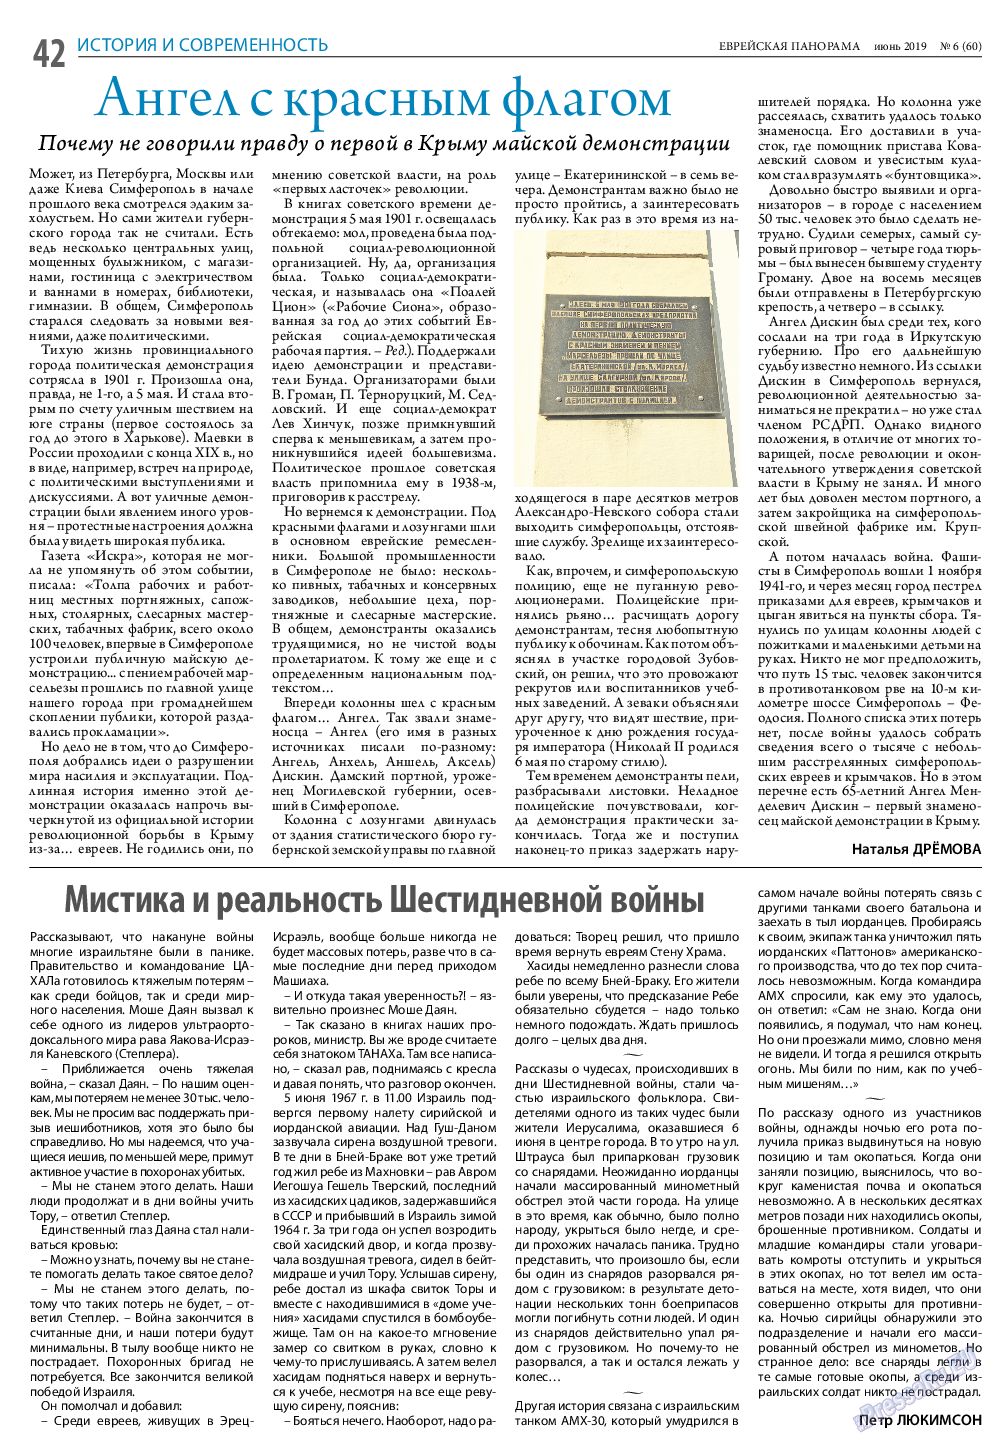 Еврейская панорама, газета. 2019 №6 стр.42